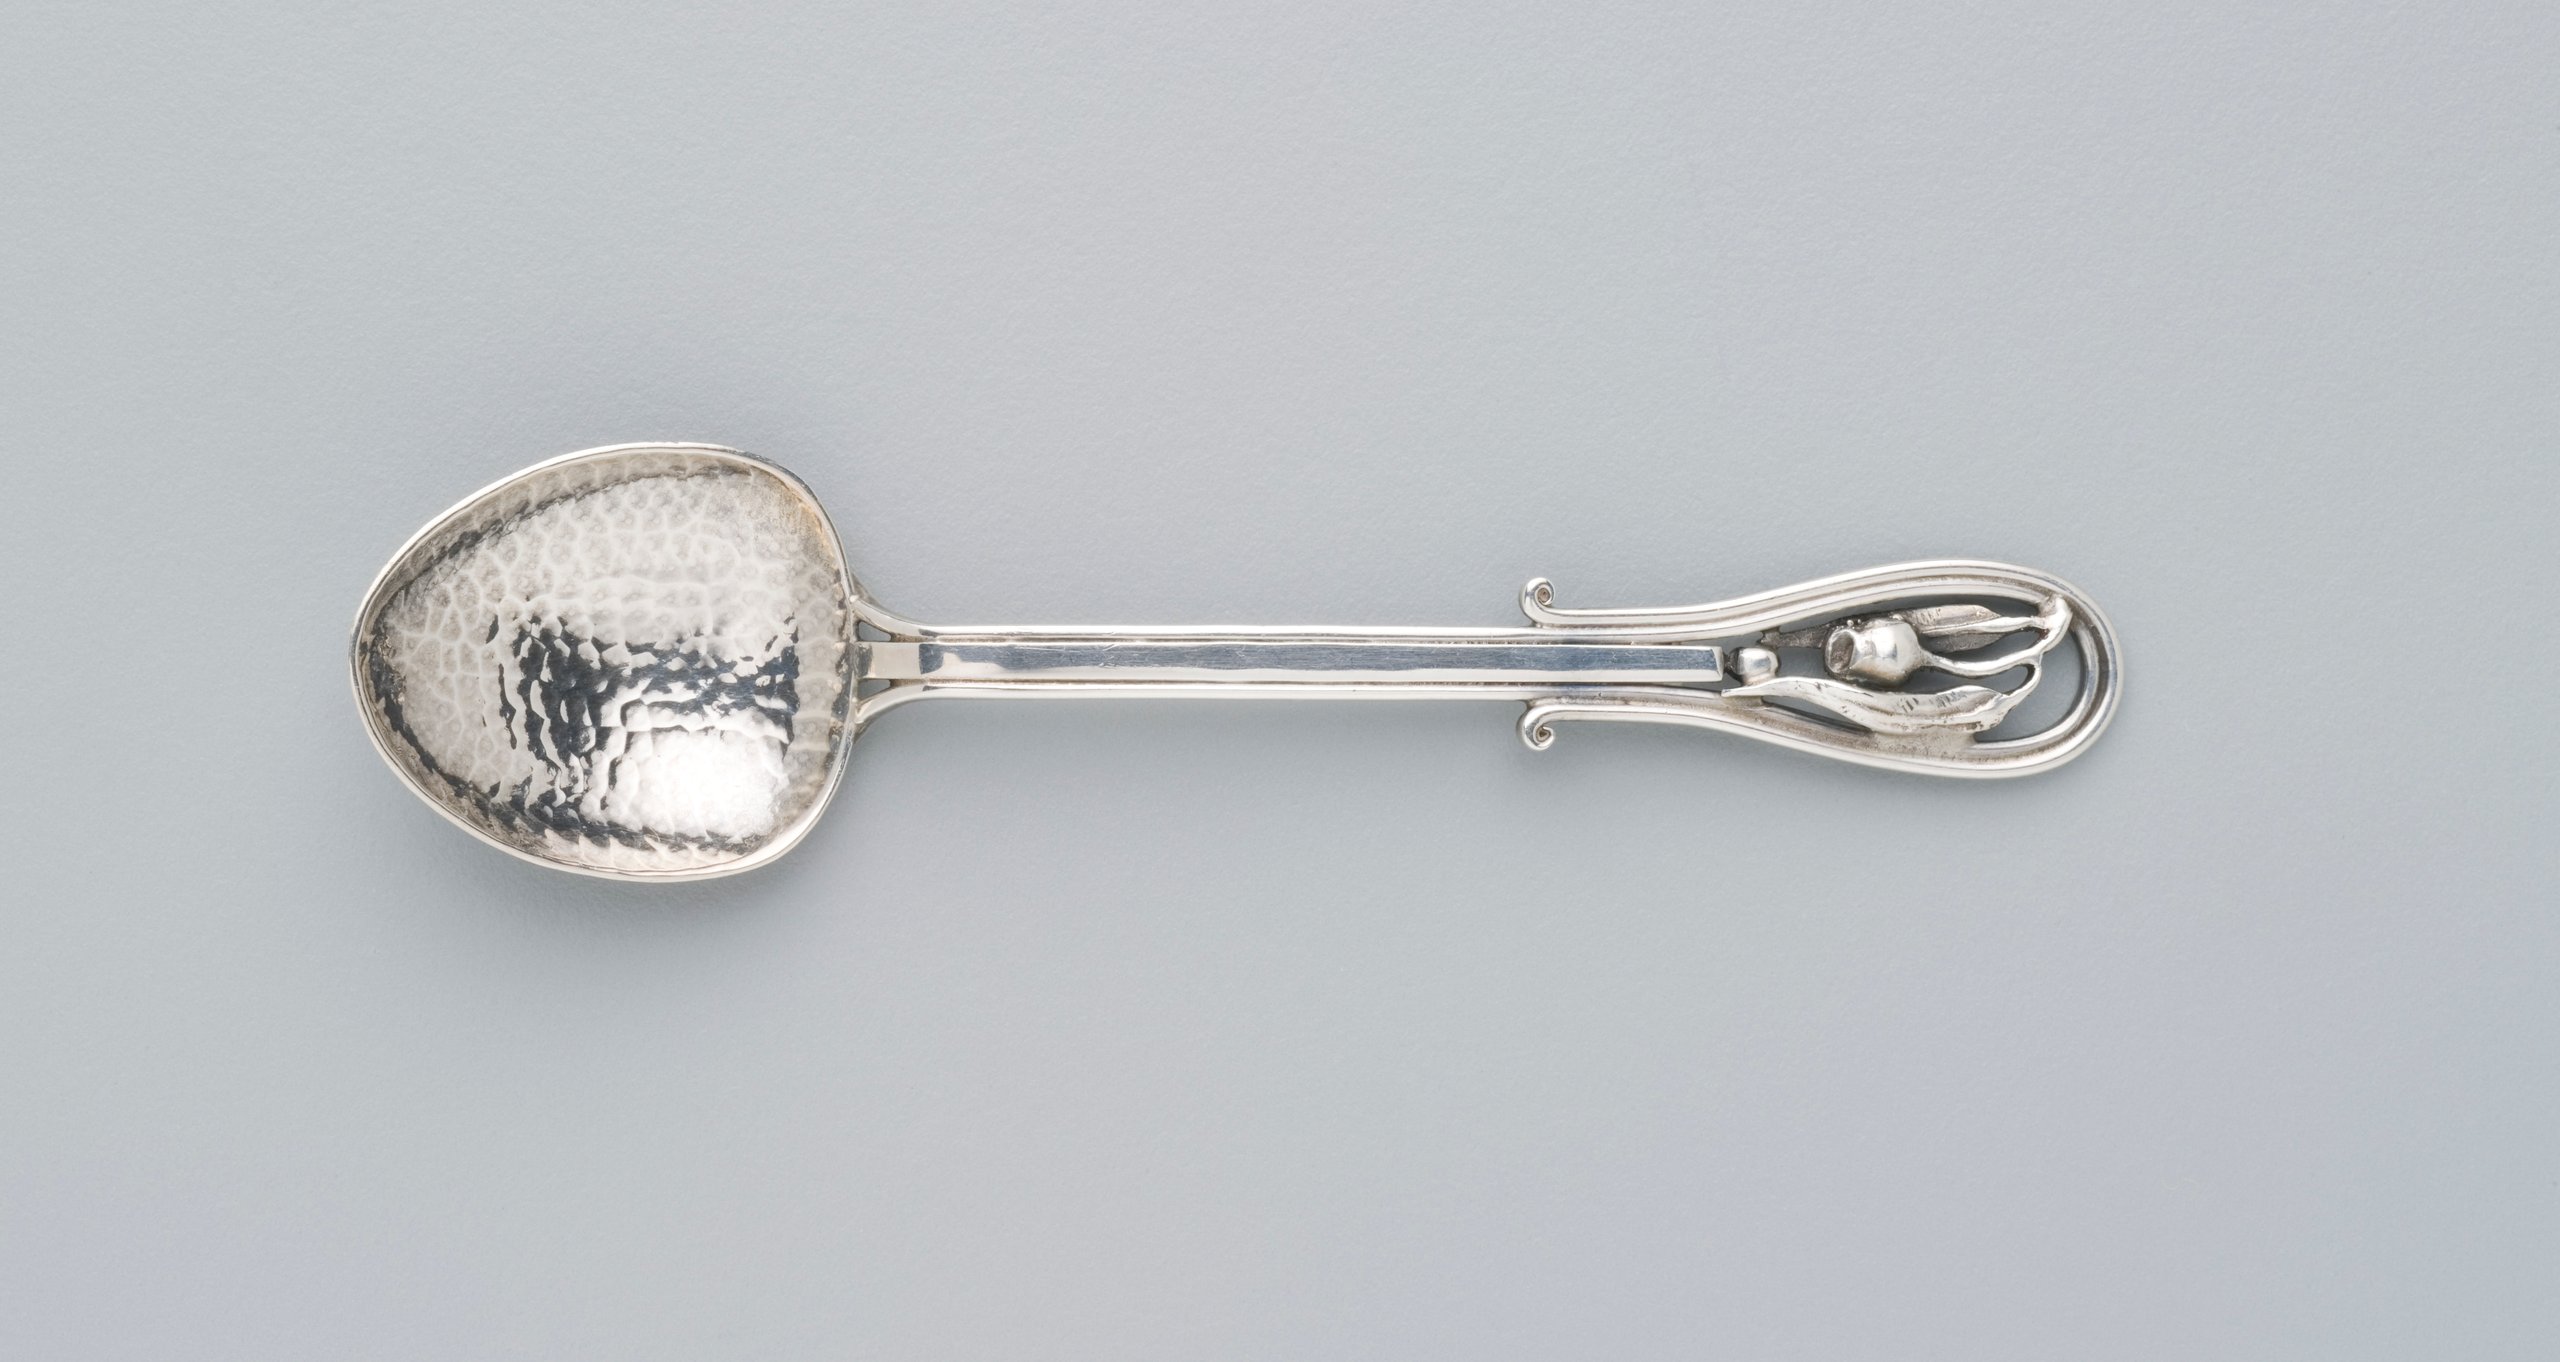 Souvenir spoon with gumnut finial